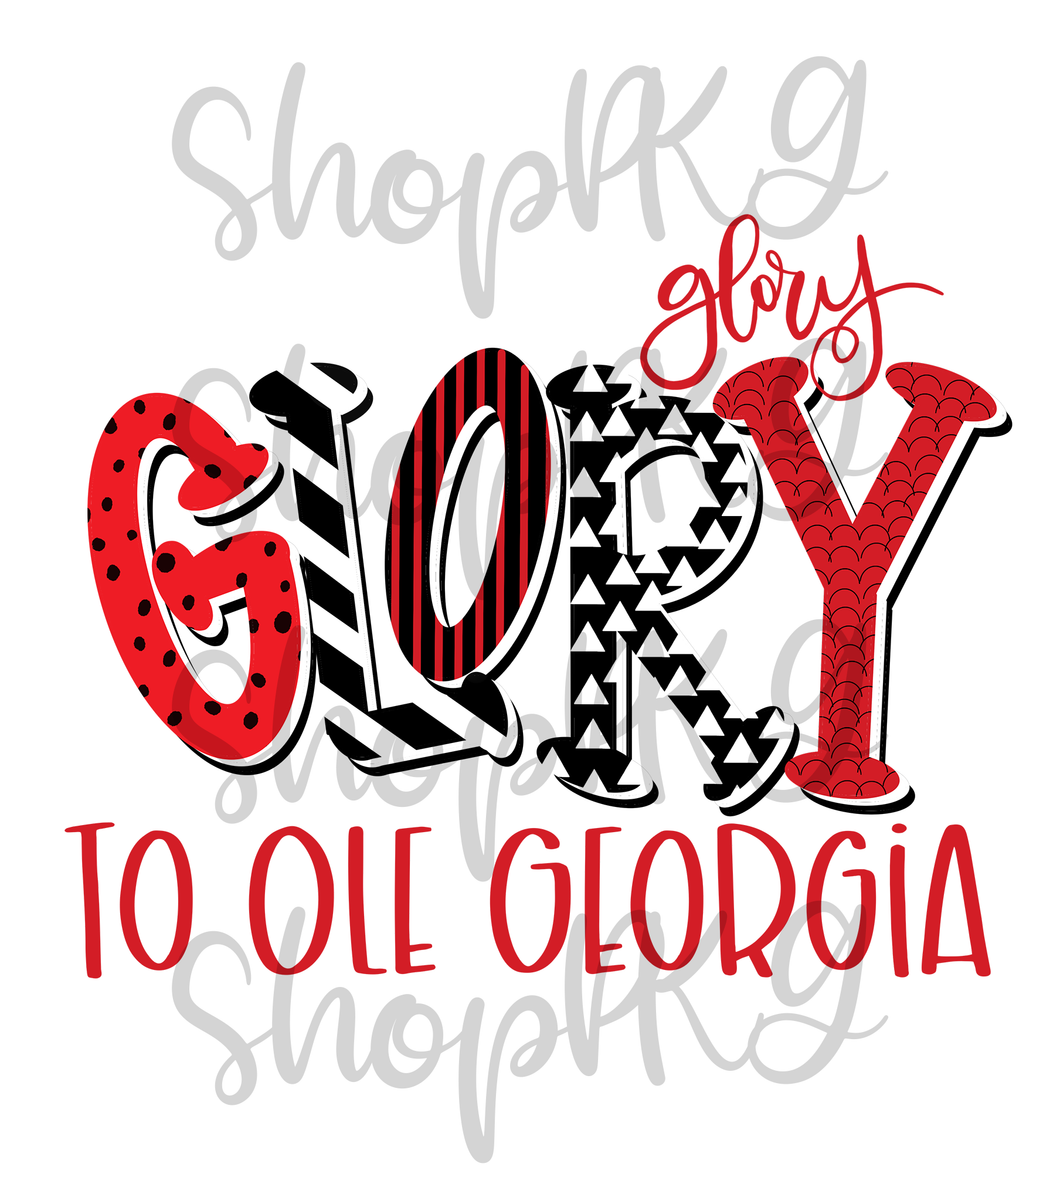 Glory Glory to Ole Georgia